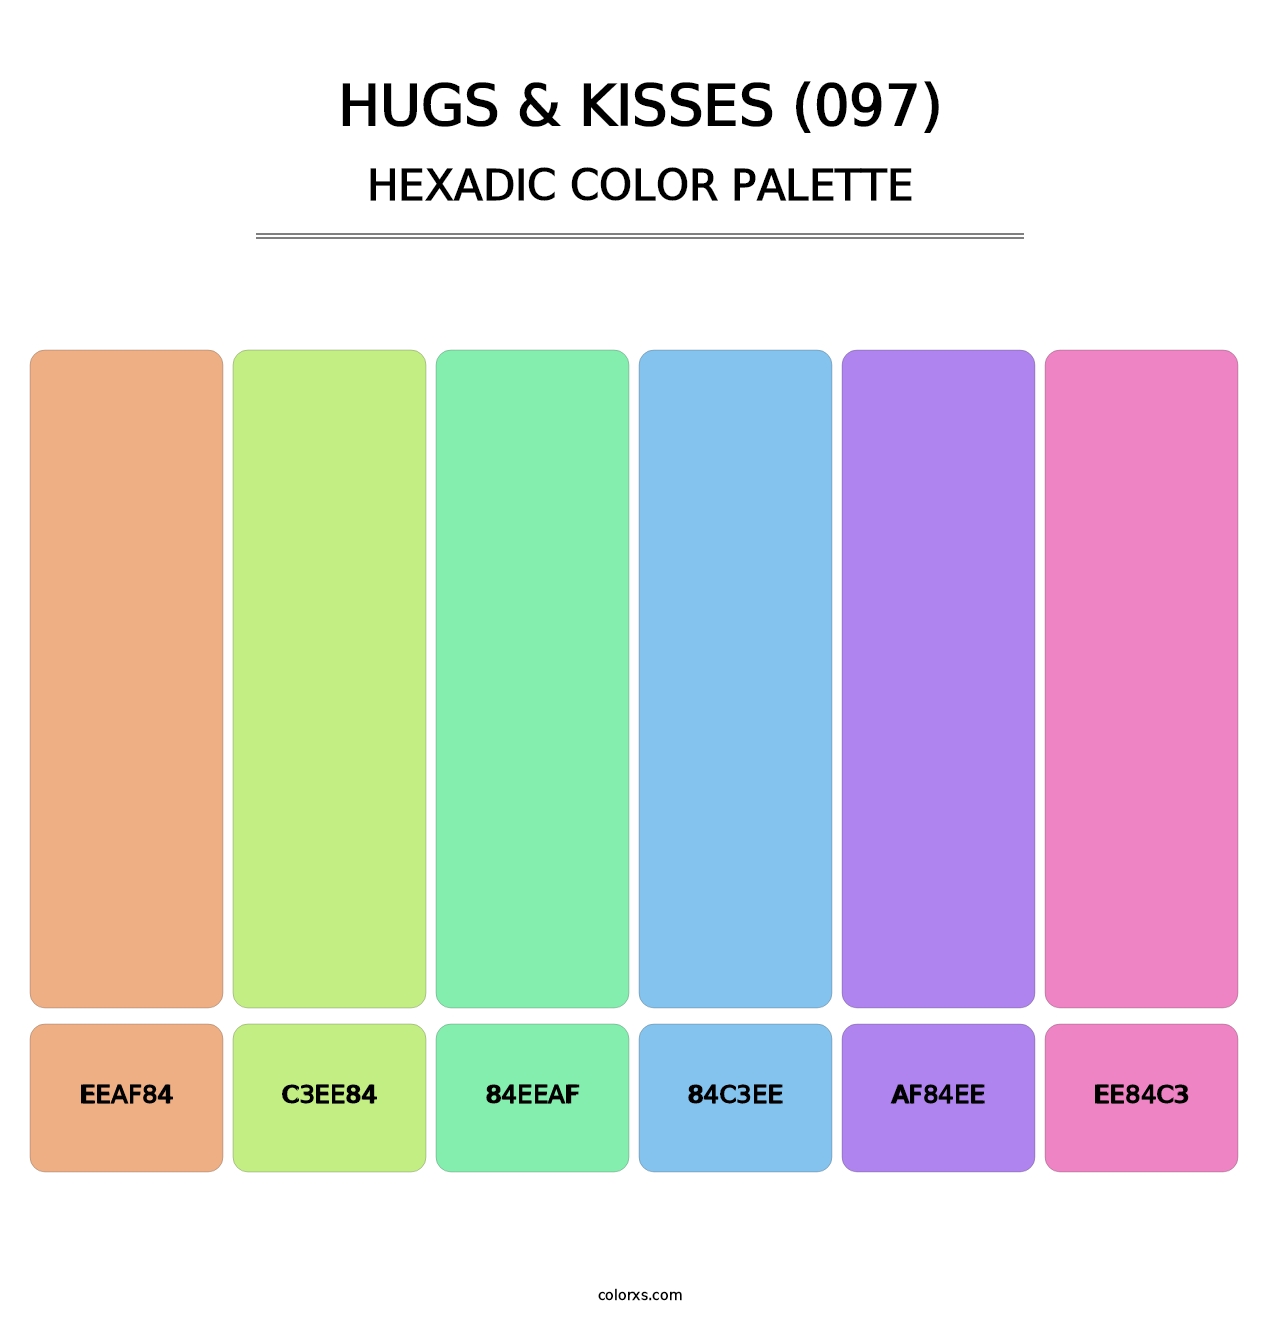 Hugs & Kisses (097) - Hexadic Color Palette